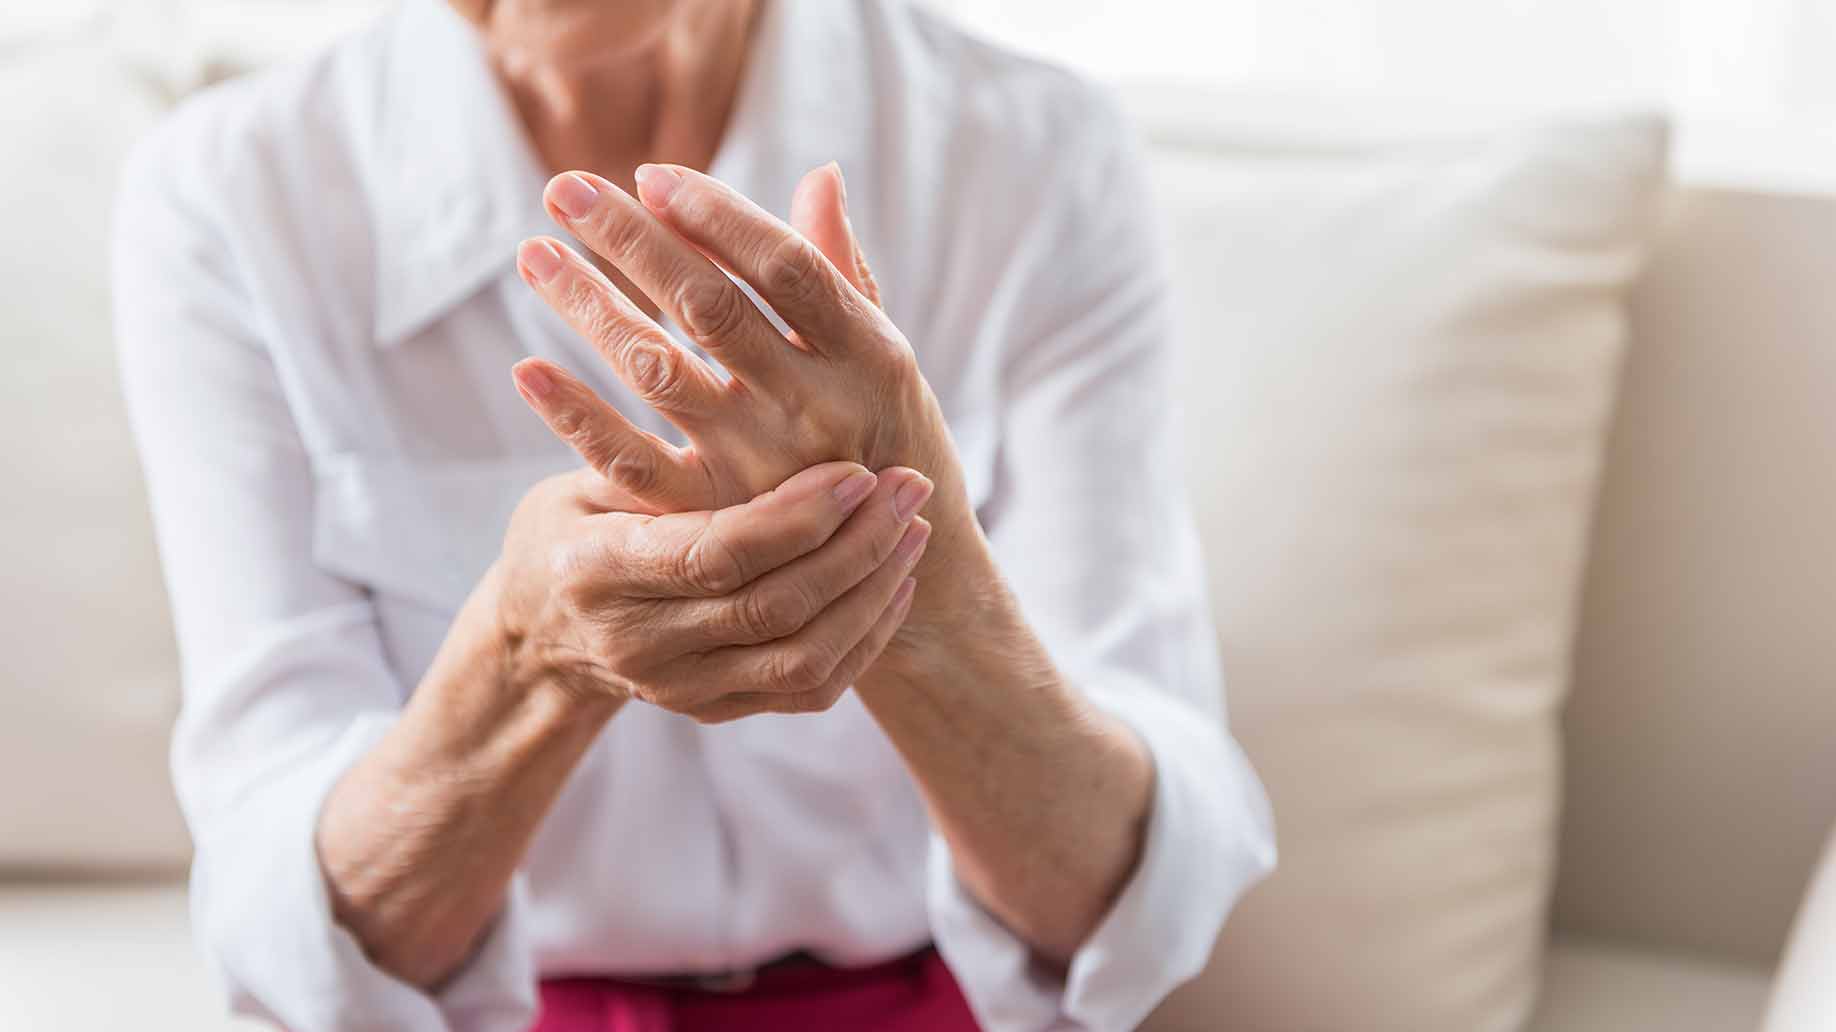 arthritis inflammation pain joints bones swelling aches natural remedies turmeric curcumin health benefits